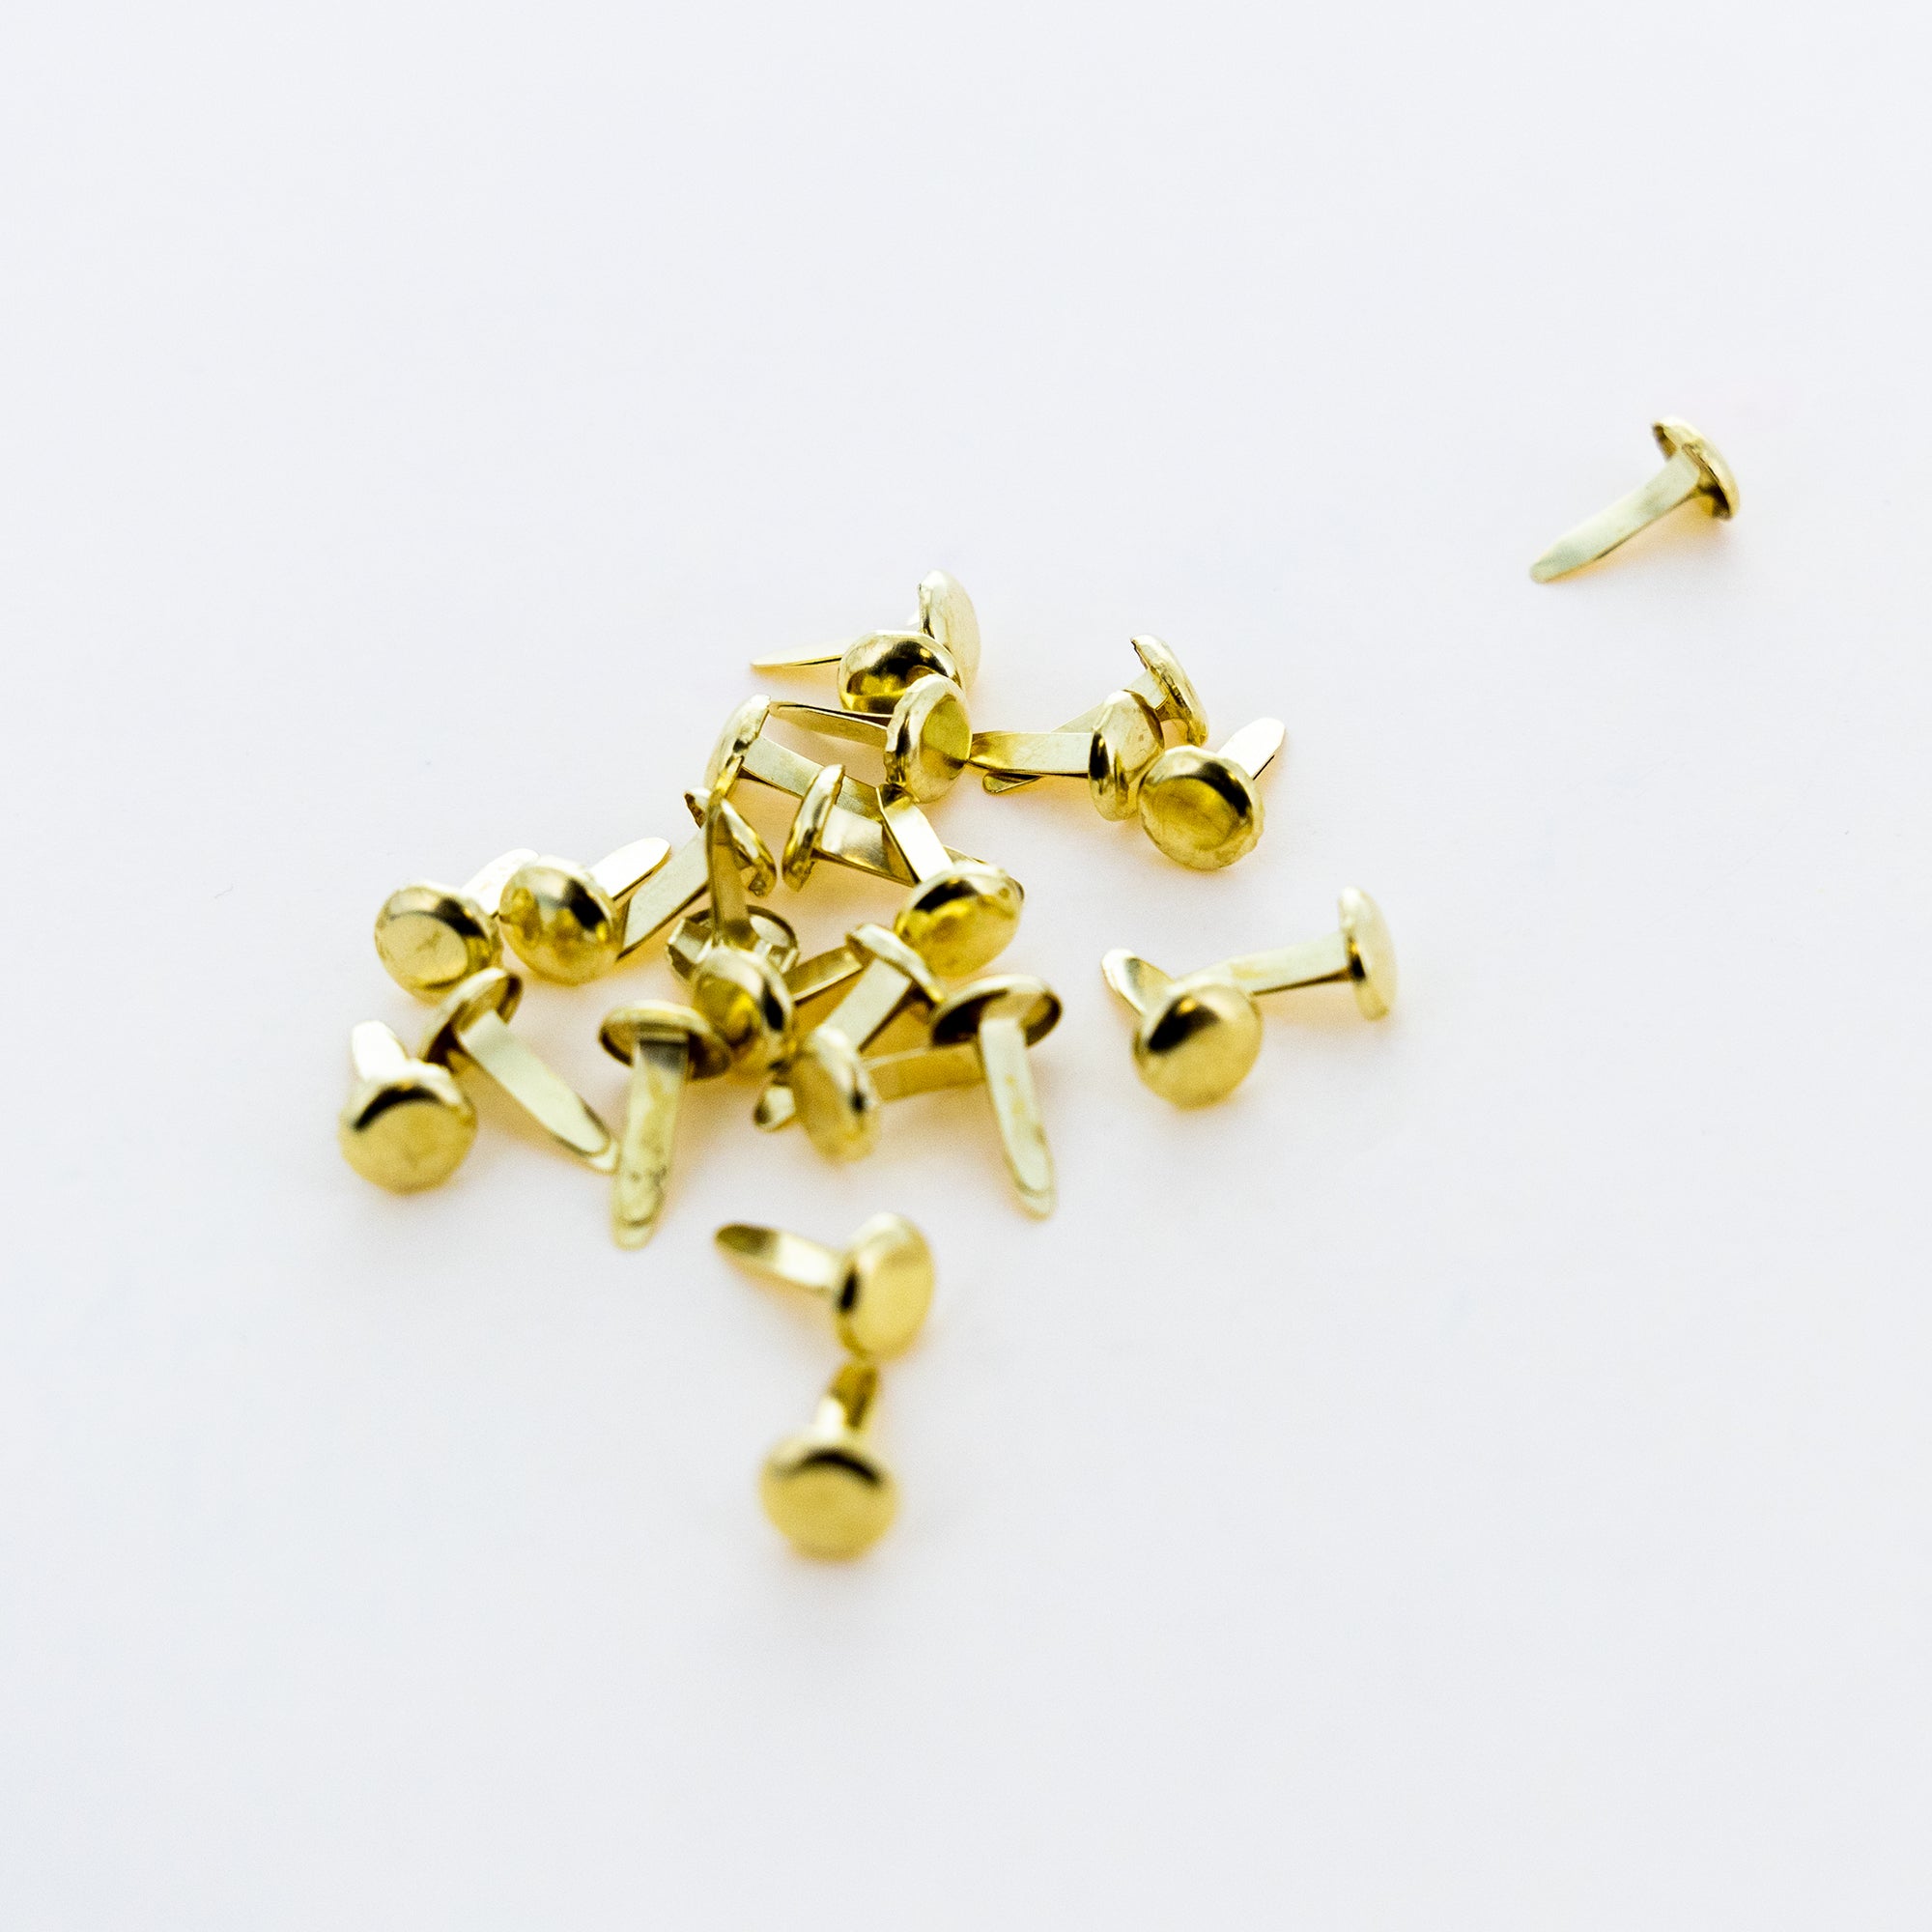 Bazic Brass Thumb Tack, Gold, 200 per Pack